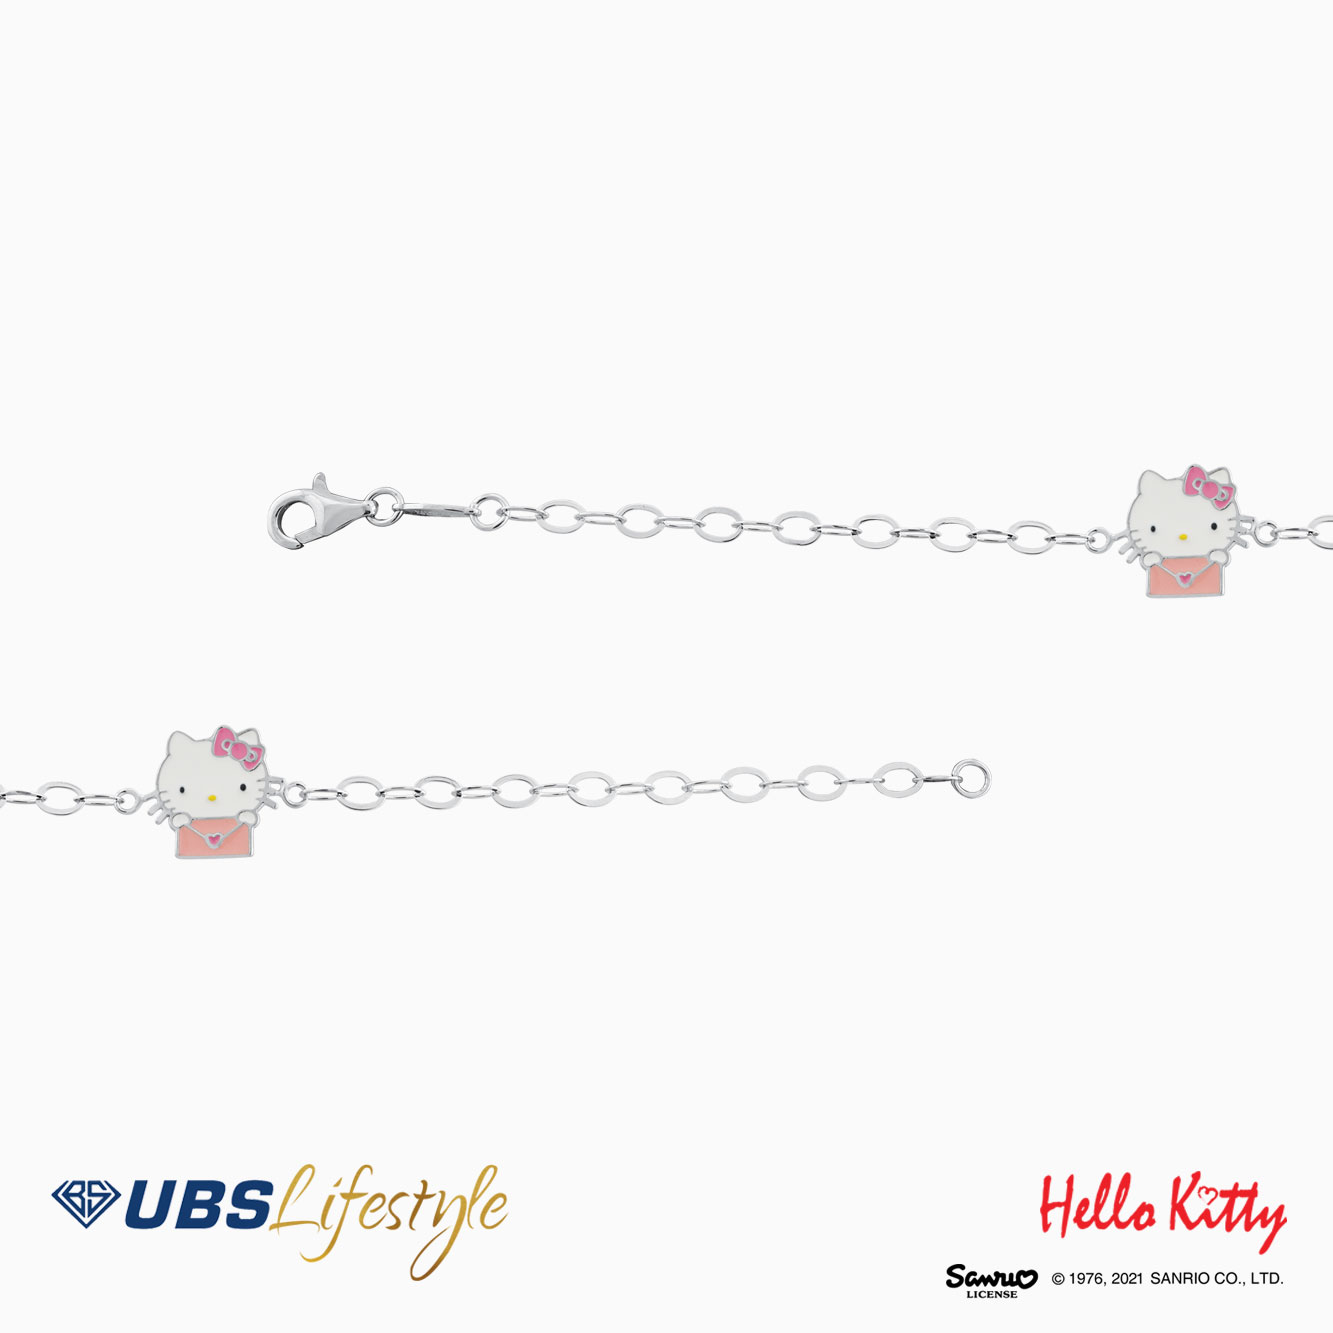 UBS Gelang Emas Anak Sanrio Hello Kitty - Kgz0013 - 17K